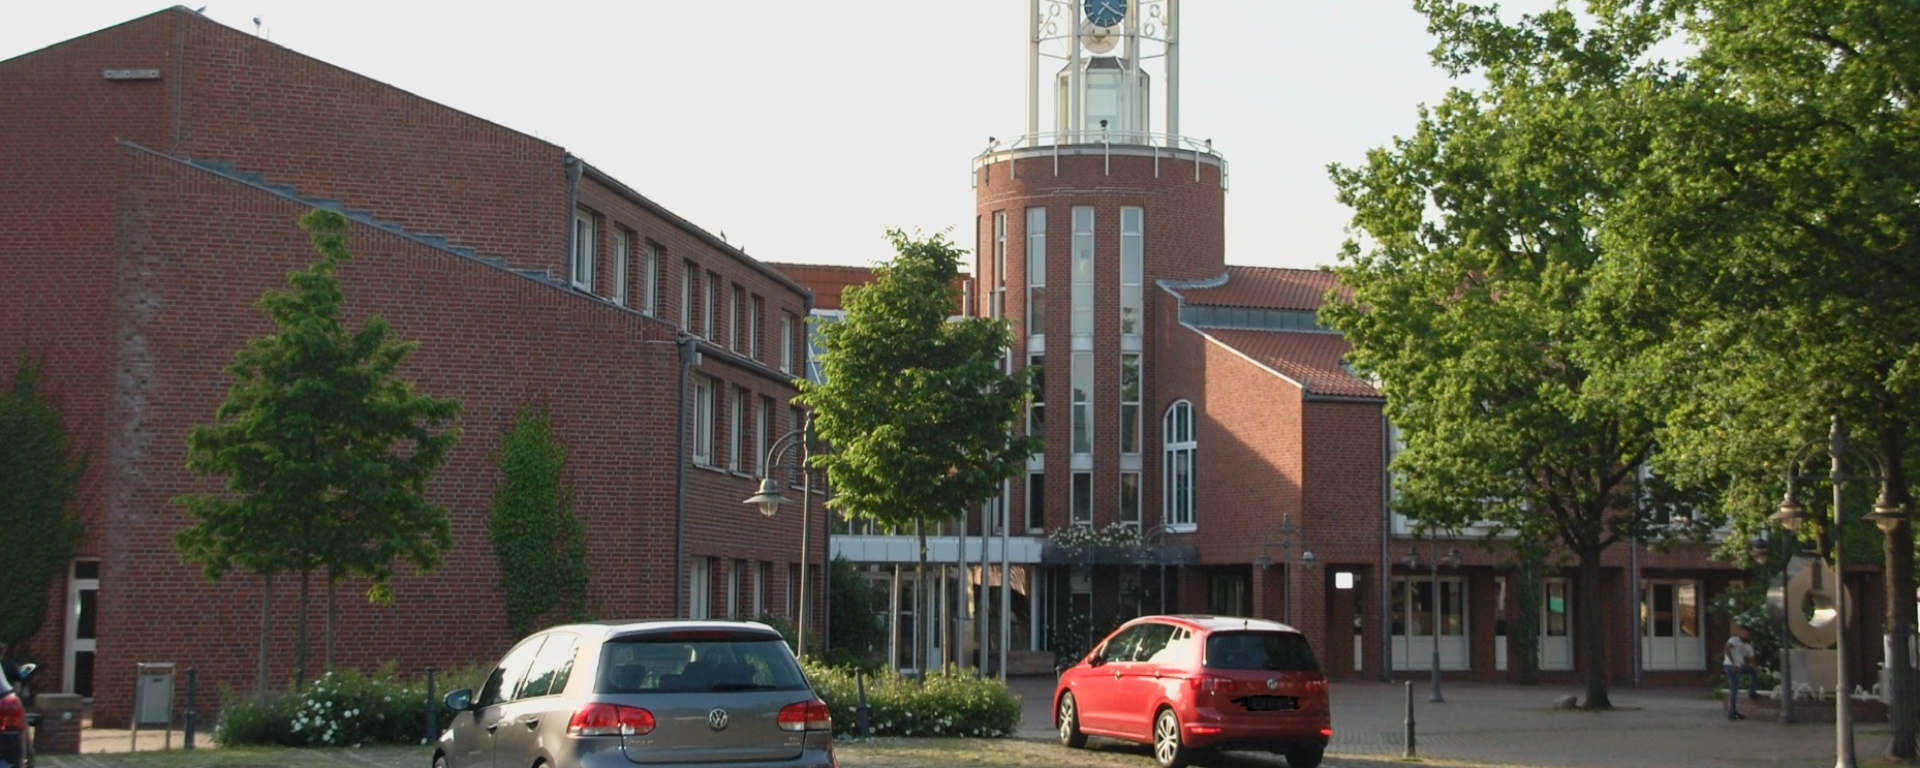 Rathaus Diepholz